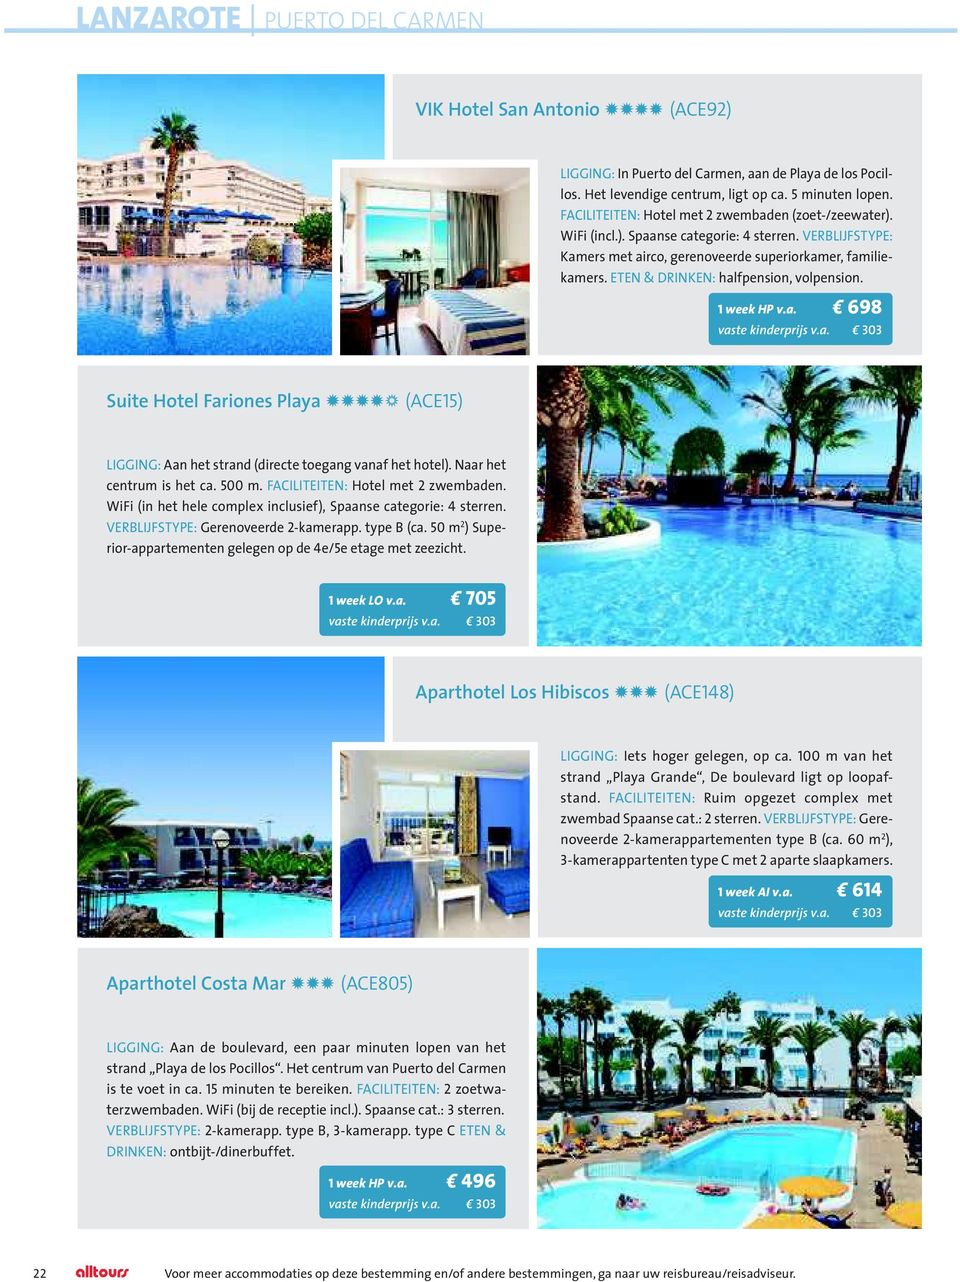 ETEN & DRINKEN: halfpension, volpension. 1 week HP v.a. 698 Suite Hotel Fariones Playa NNNNn (ACE15) LIGGING: Aan het strand (directe toegang vanaf het hotel). Naar het centrum is het ca. 500 m.